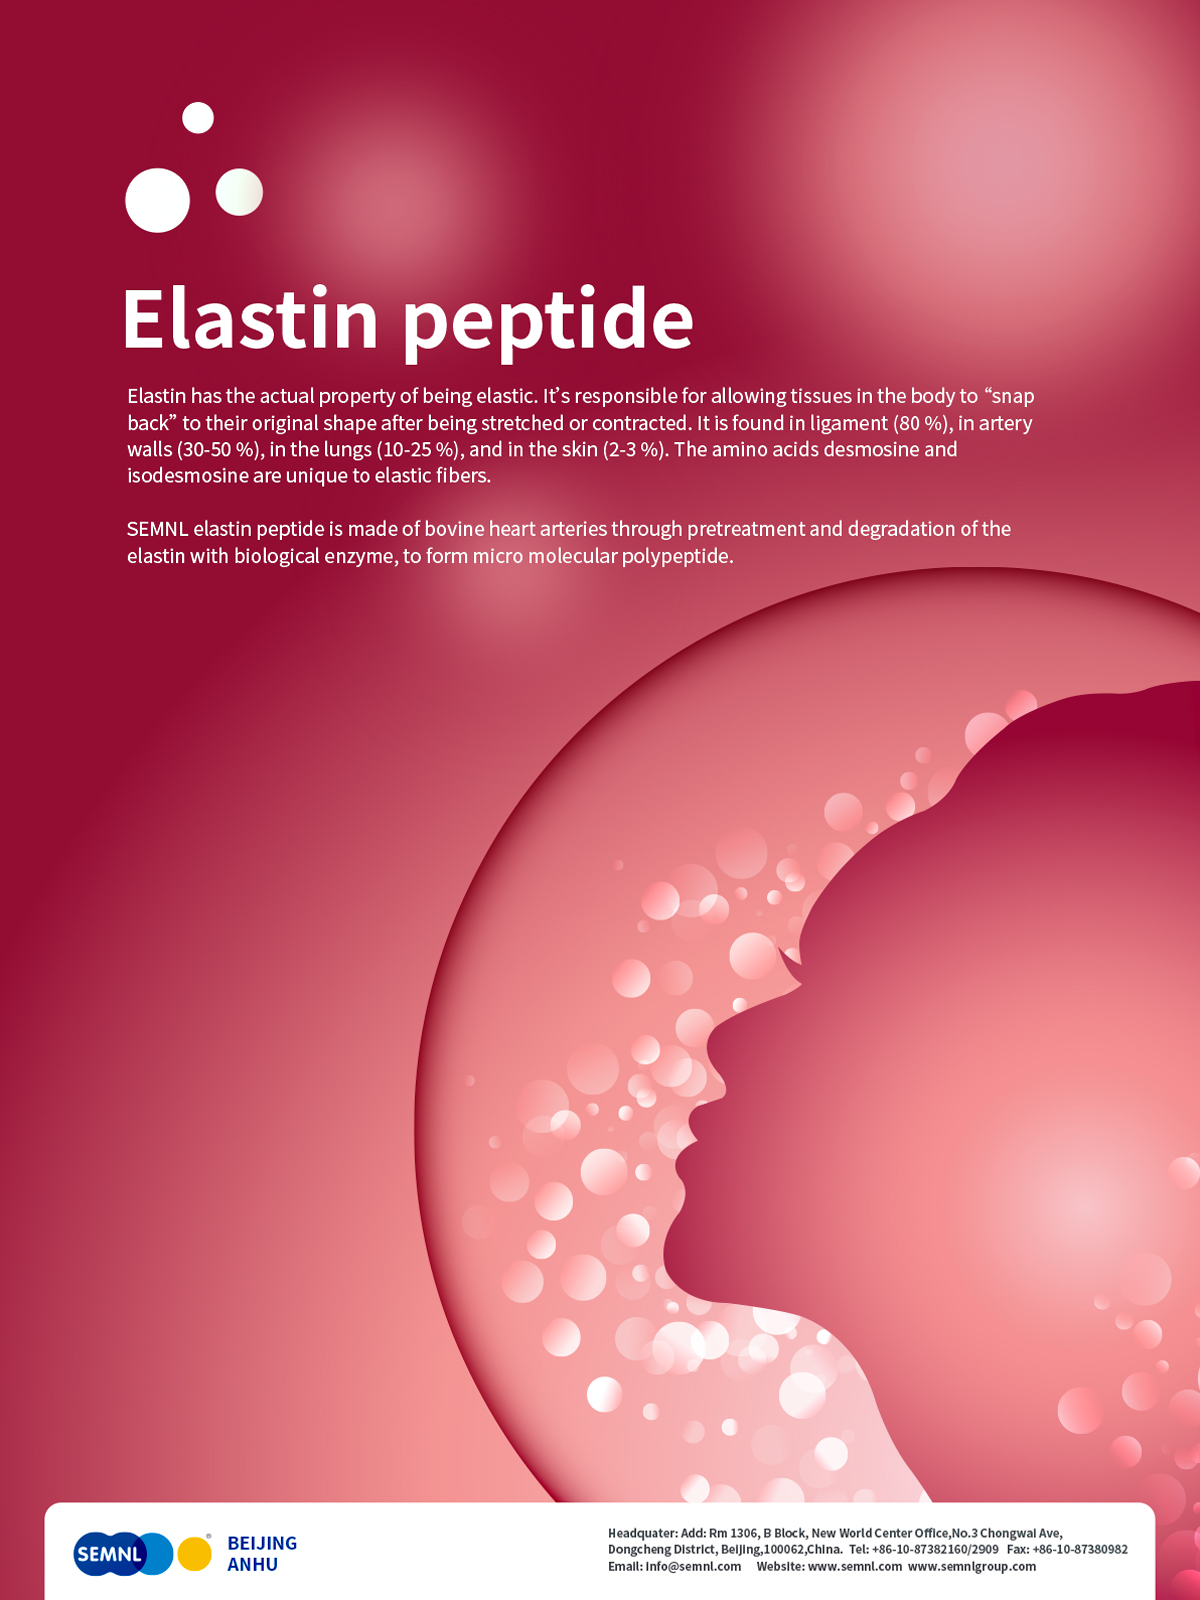 Elastin Peptide treatments to smooth skin texture